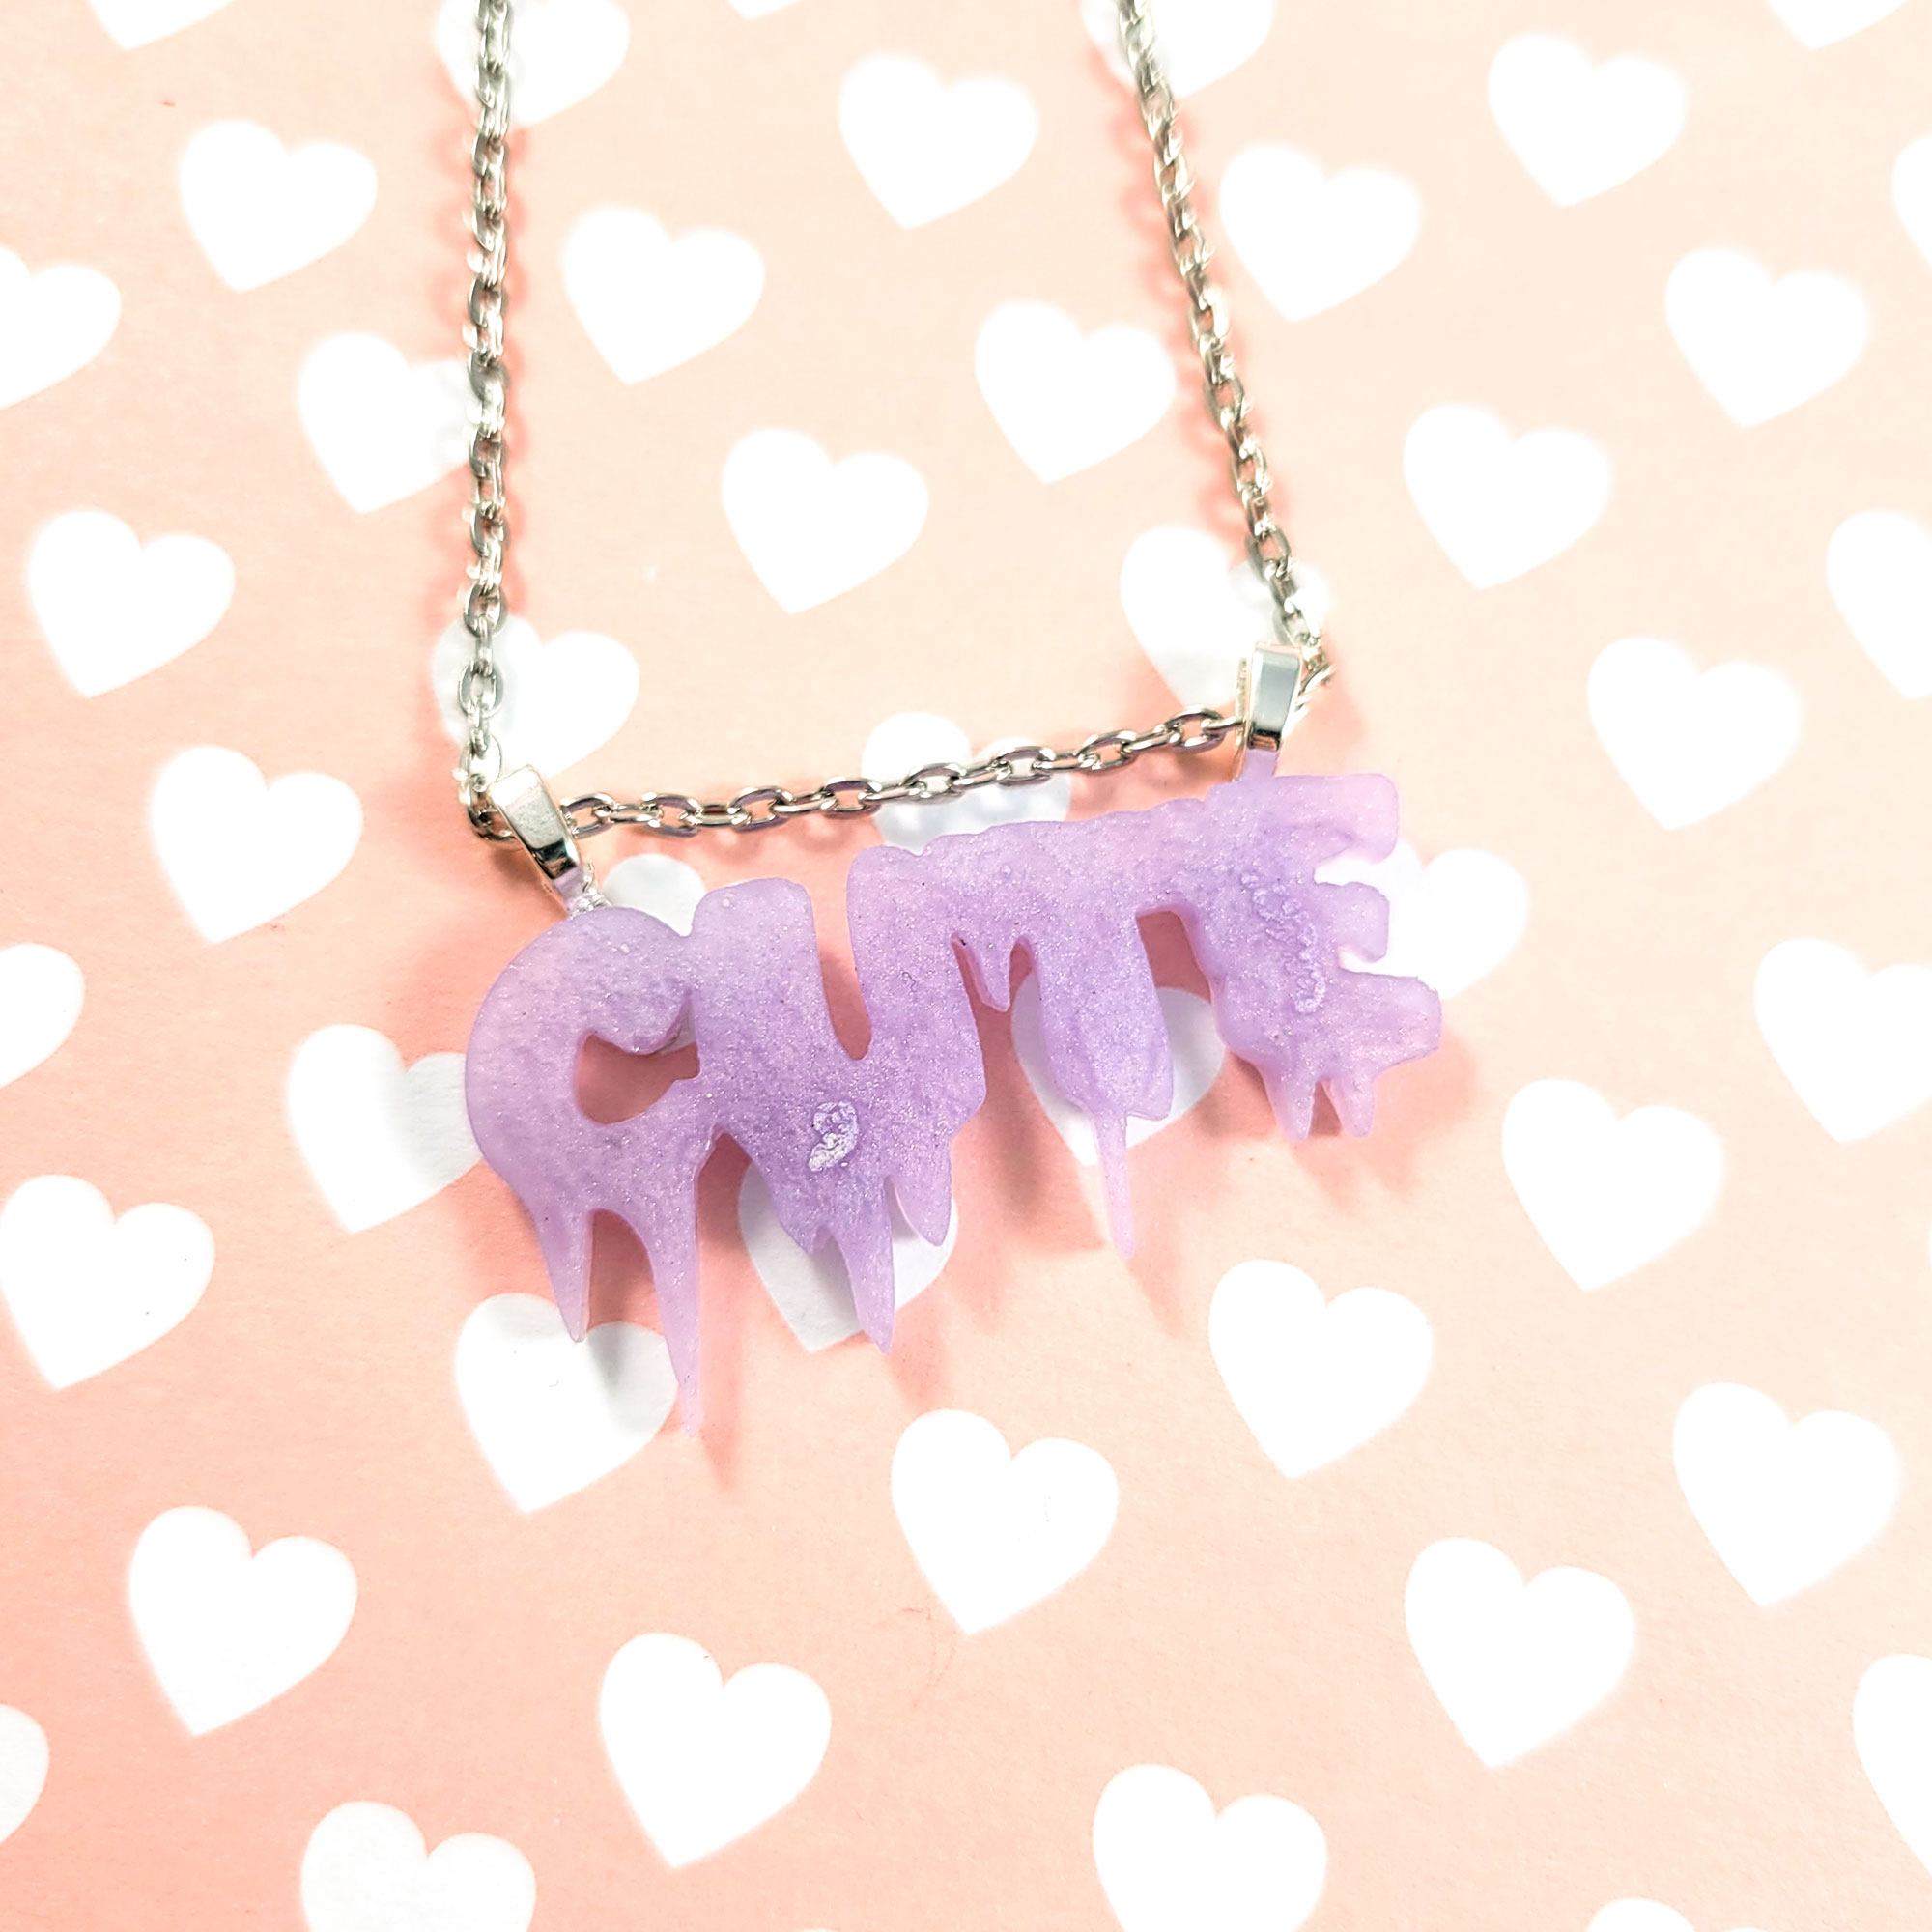 Spooky Cute Necklace by Wilde Designs